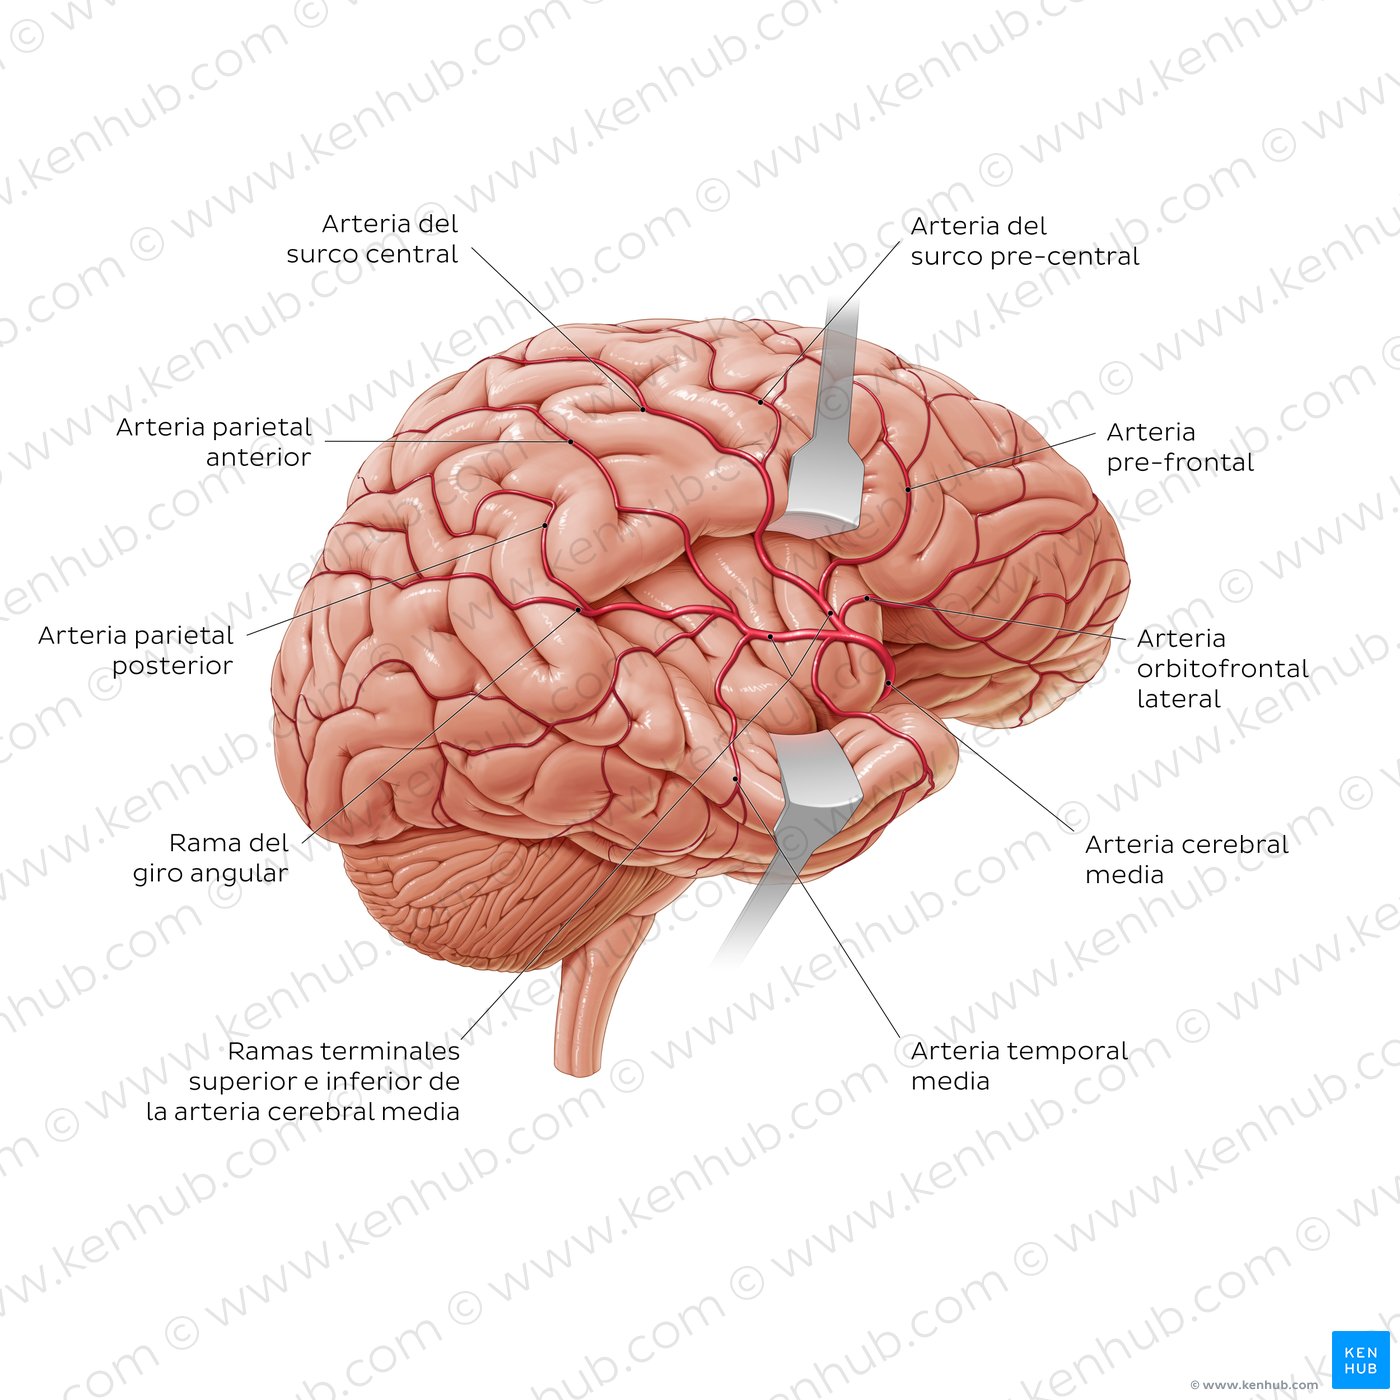 Arterias del encéfalo - Vista lateral